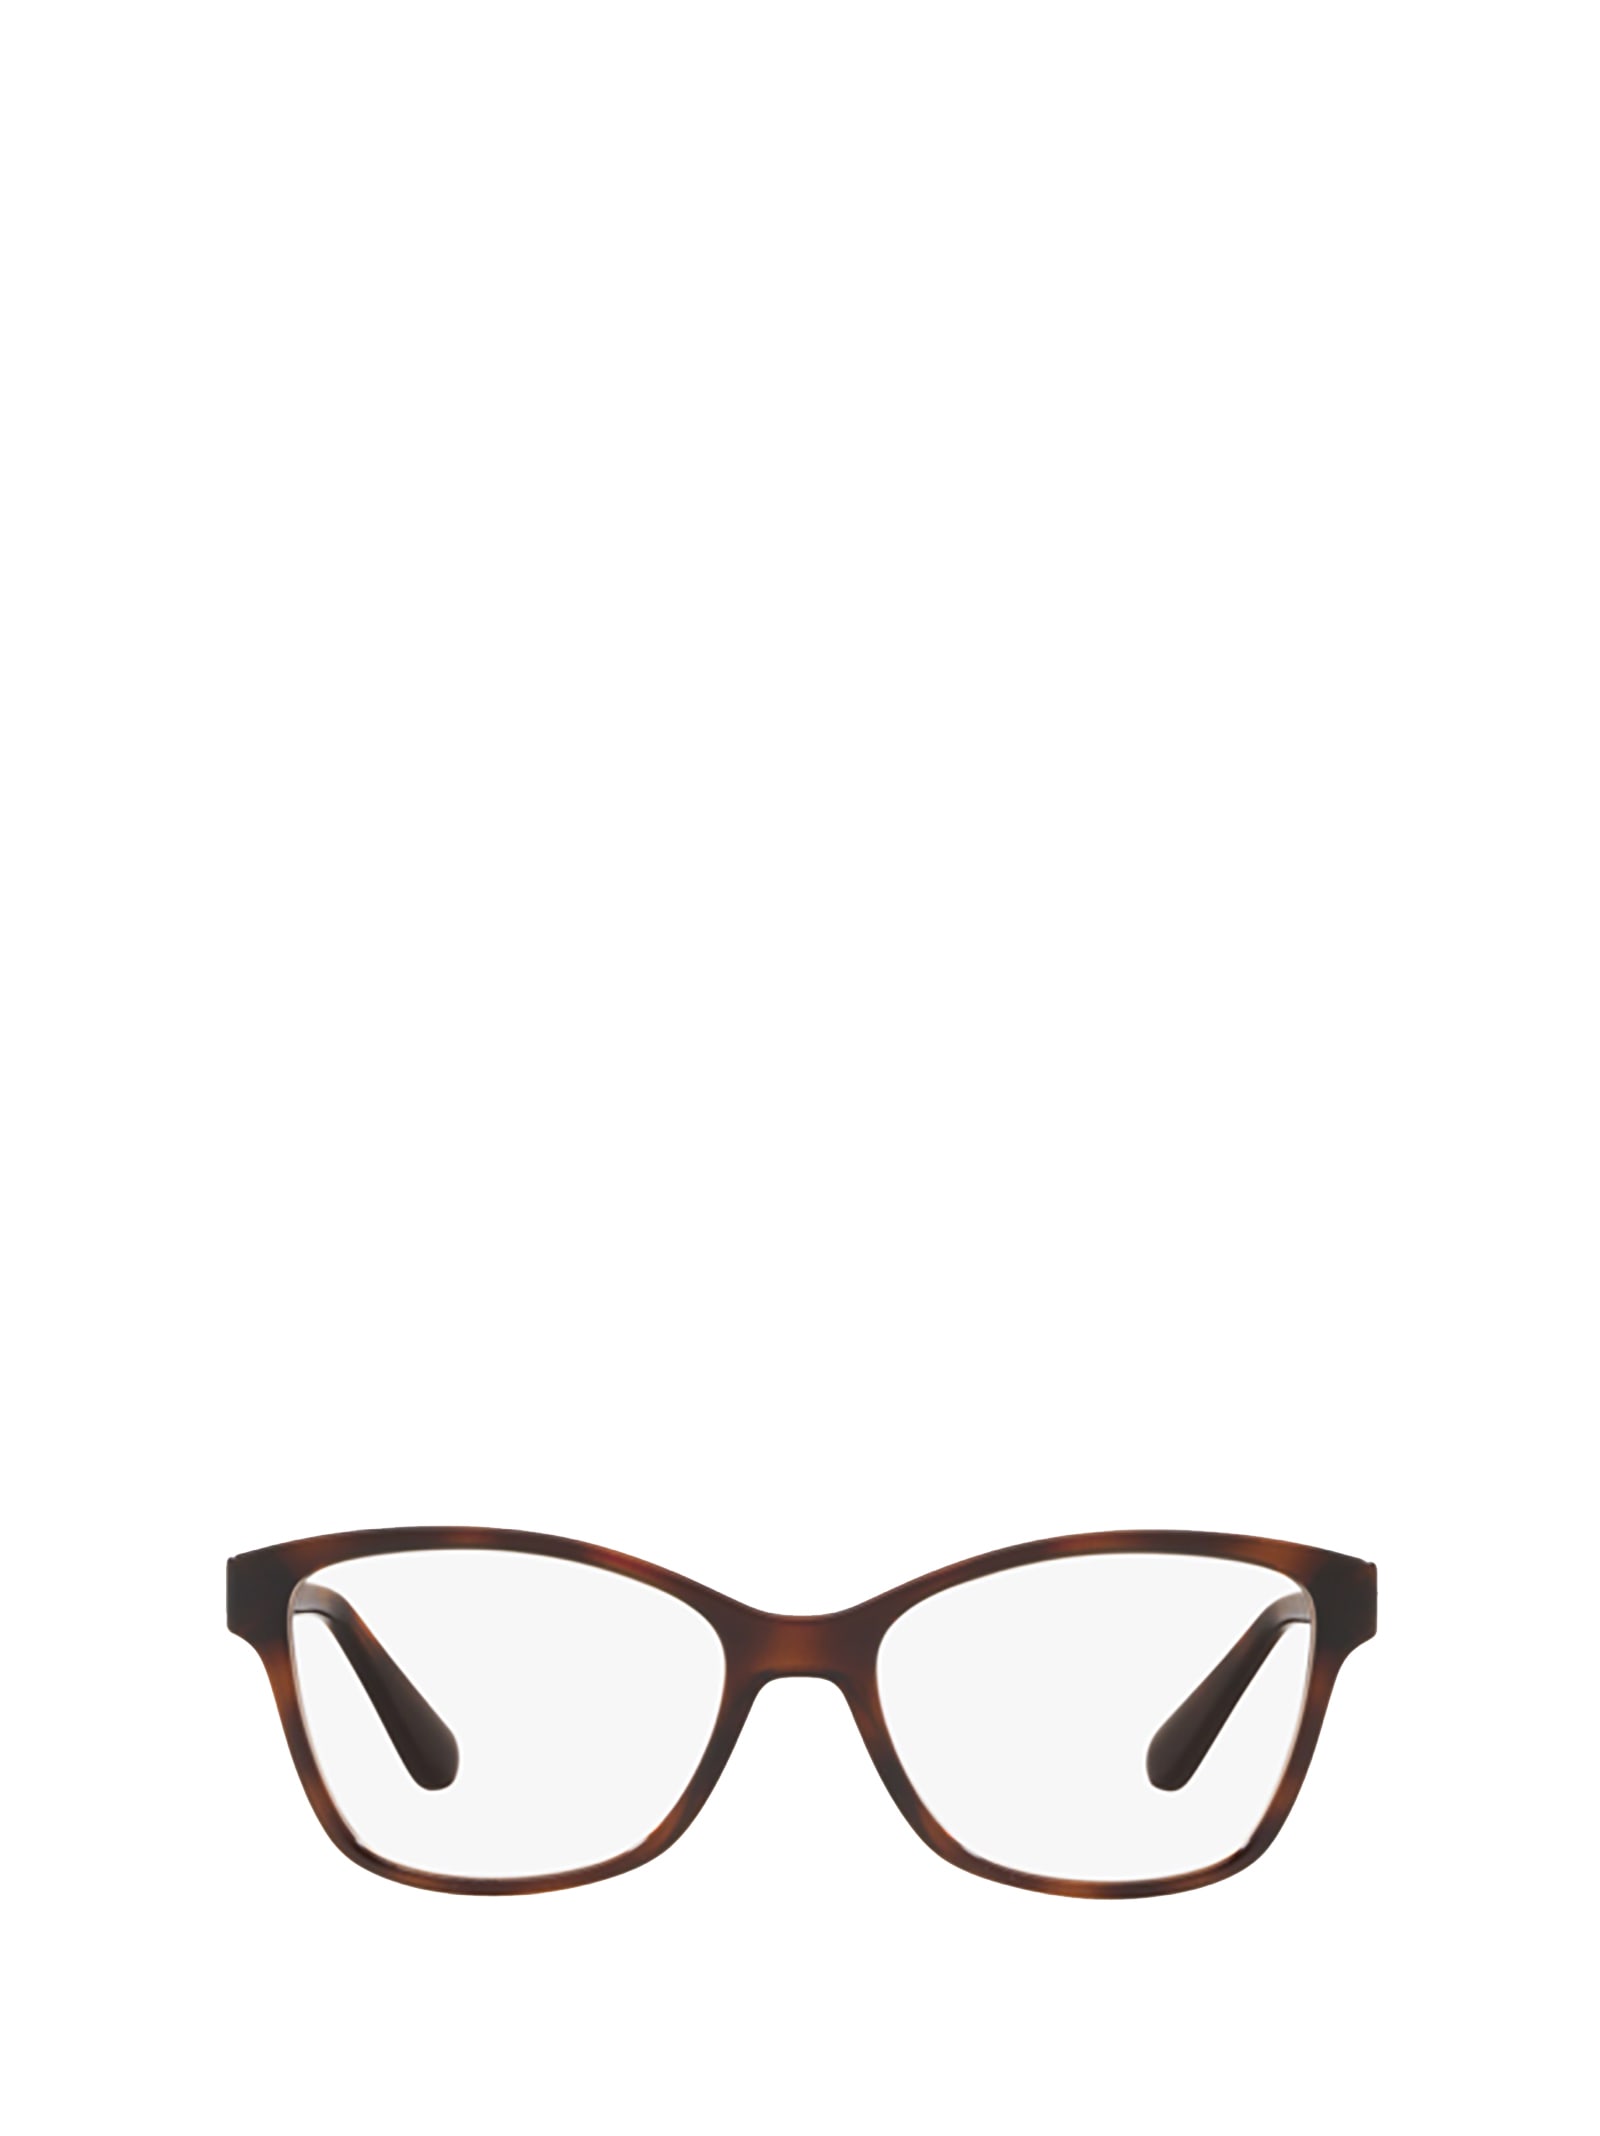 Vo2998 Top Havana / Light Brown Glasses